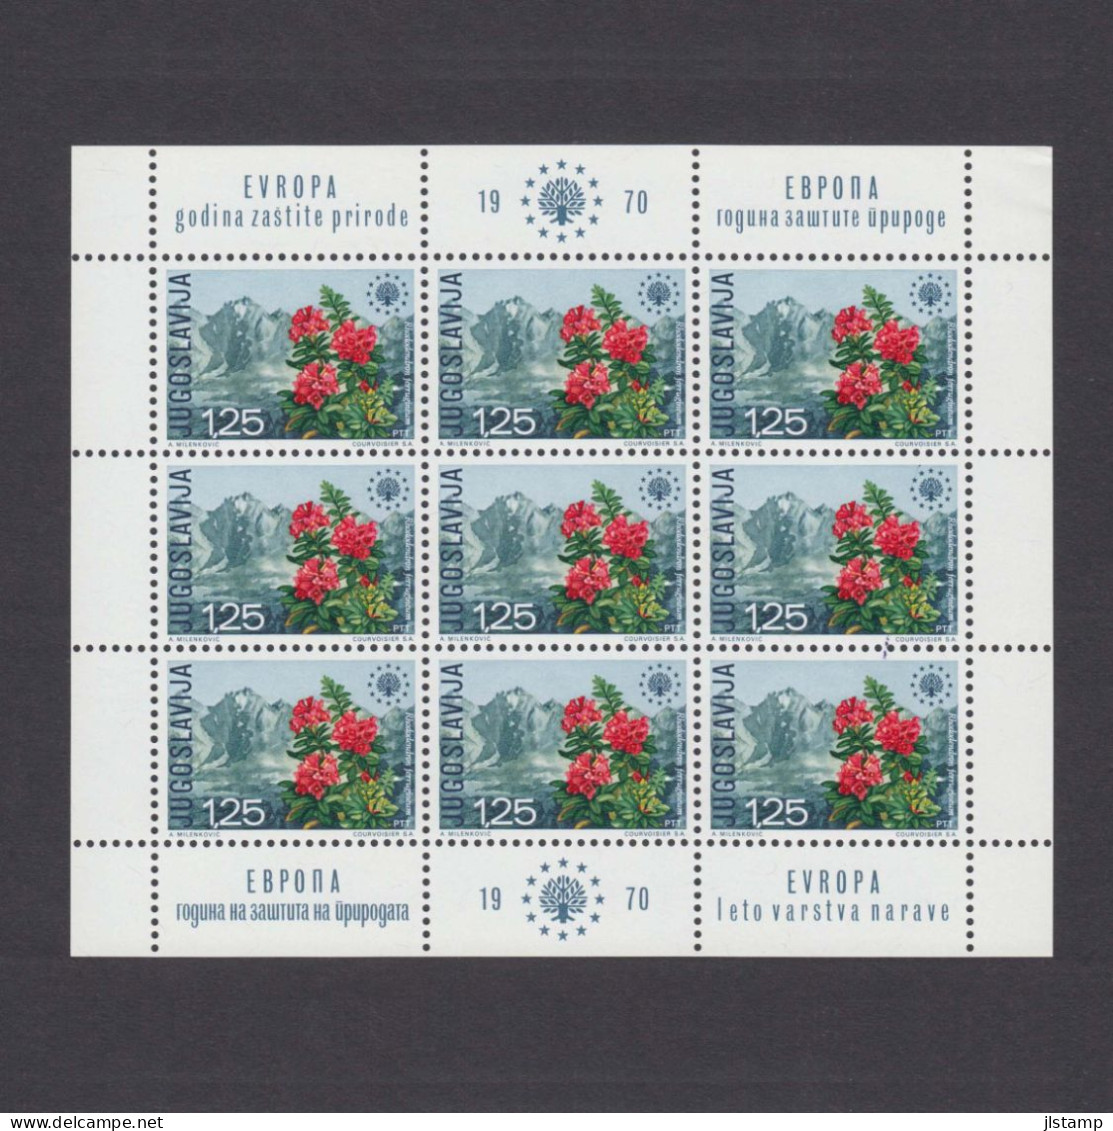 Yugoslavia 1970 European Nature Protection Year Stamp Sheet,Scott#1042-1043,OG,MNH,VF - Unused Stamps